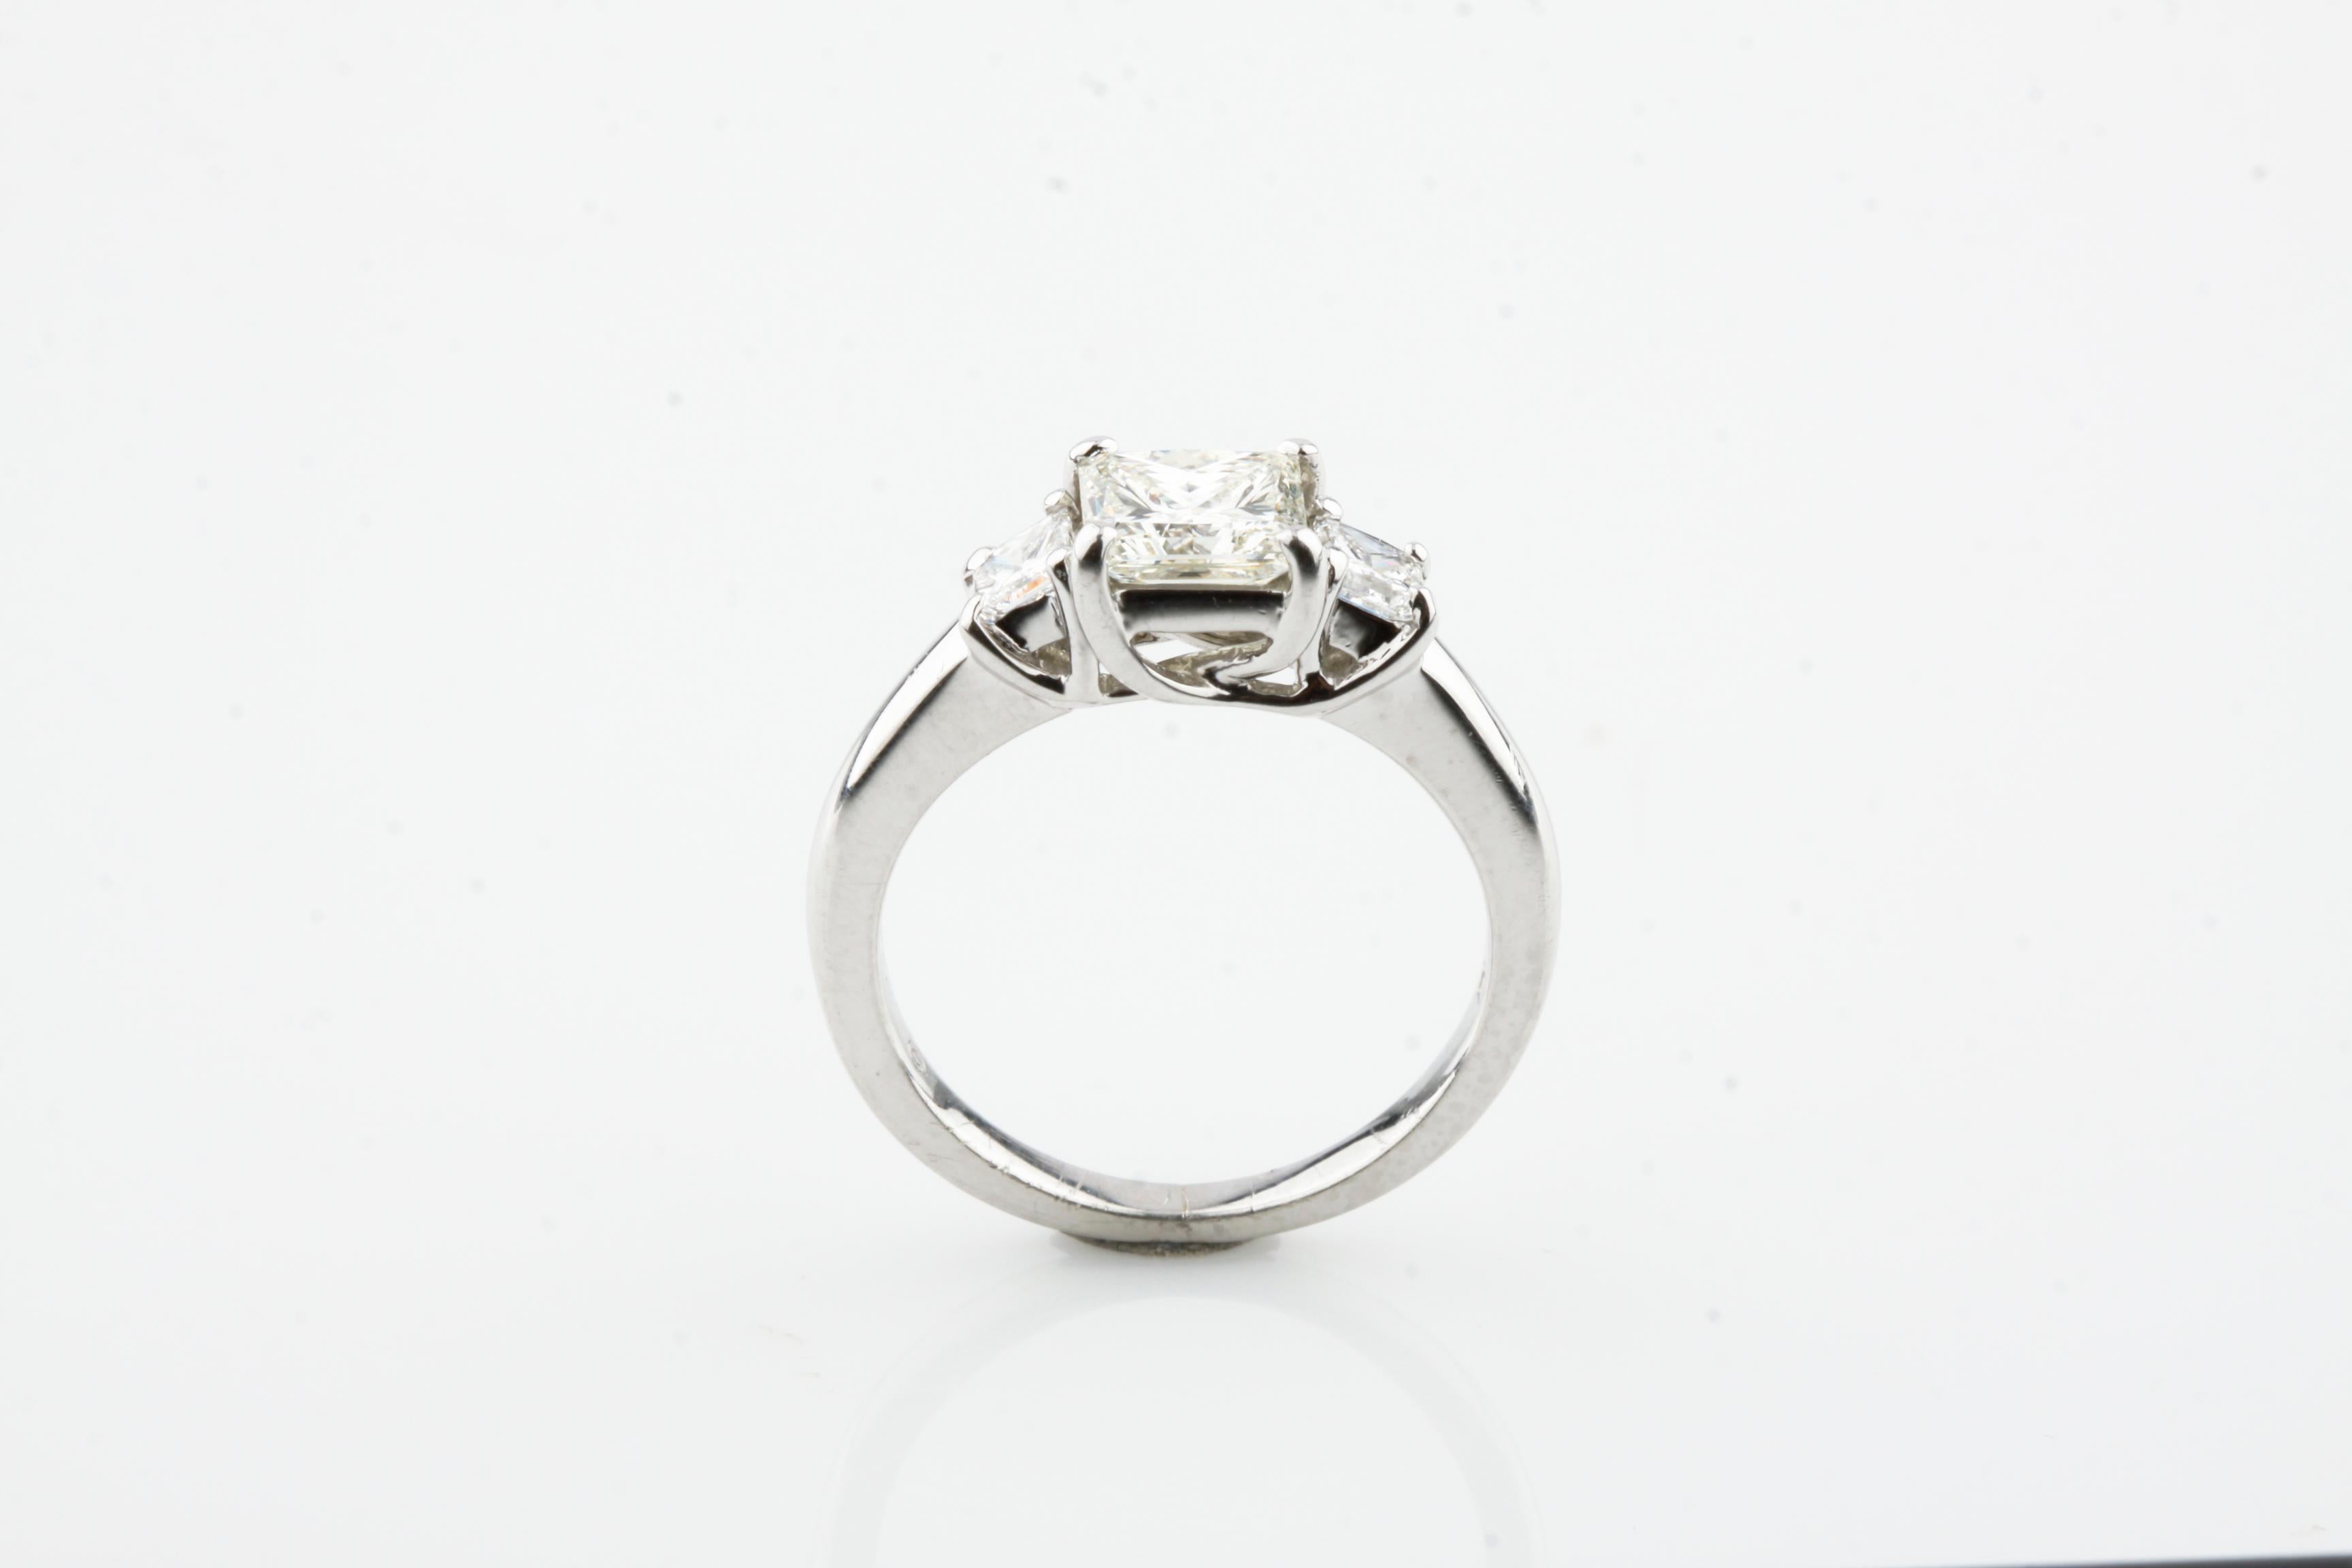 3 stone princess cut engagement rings